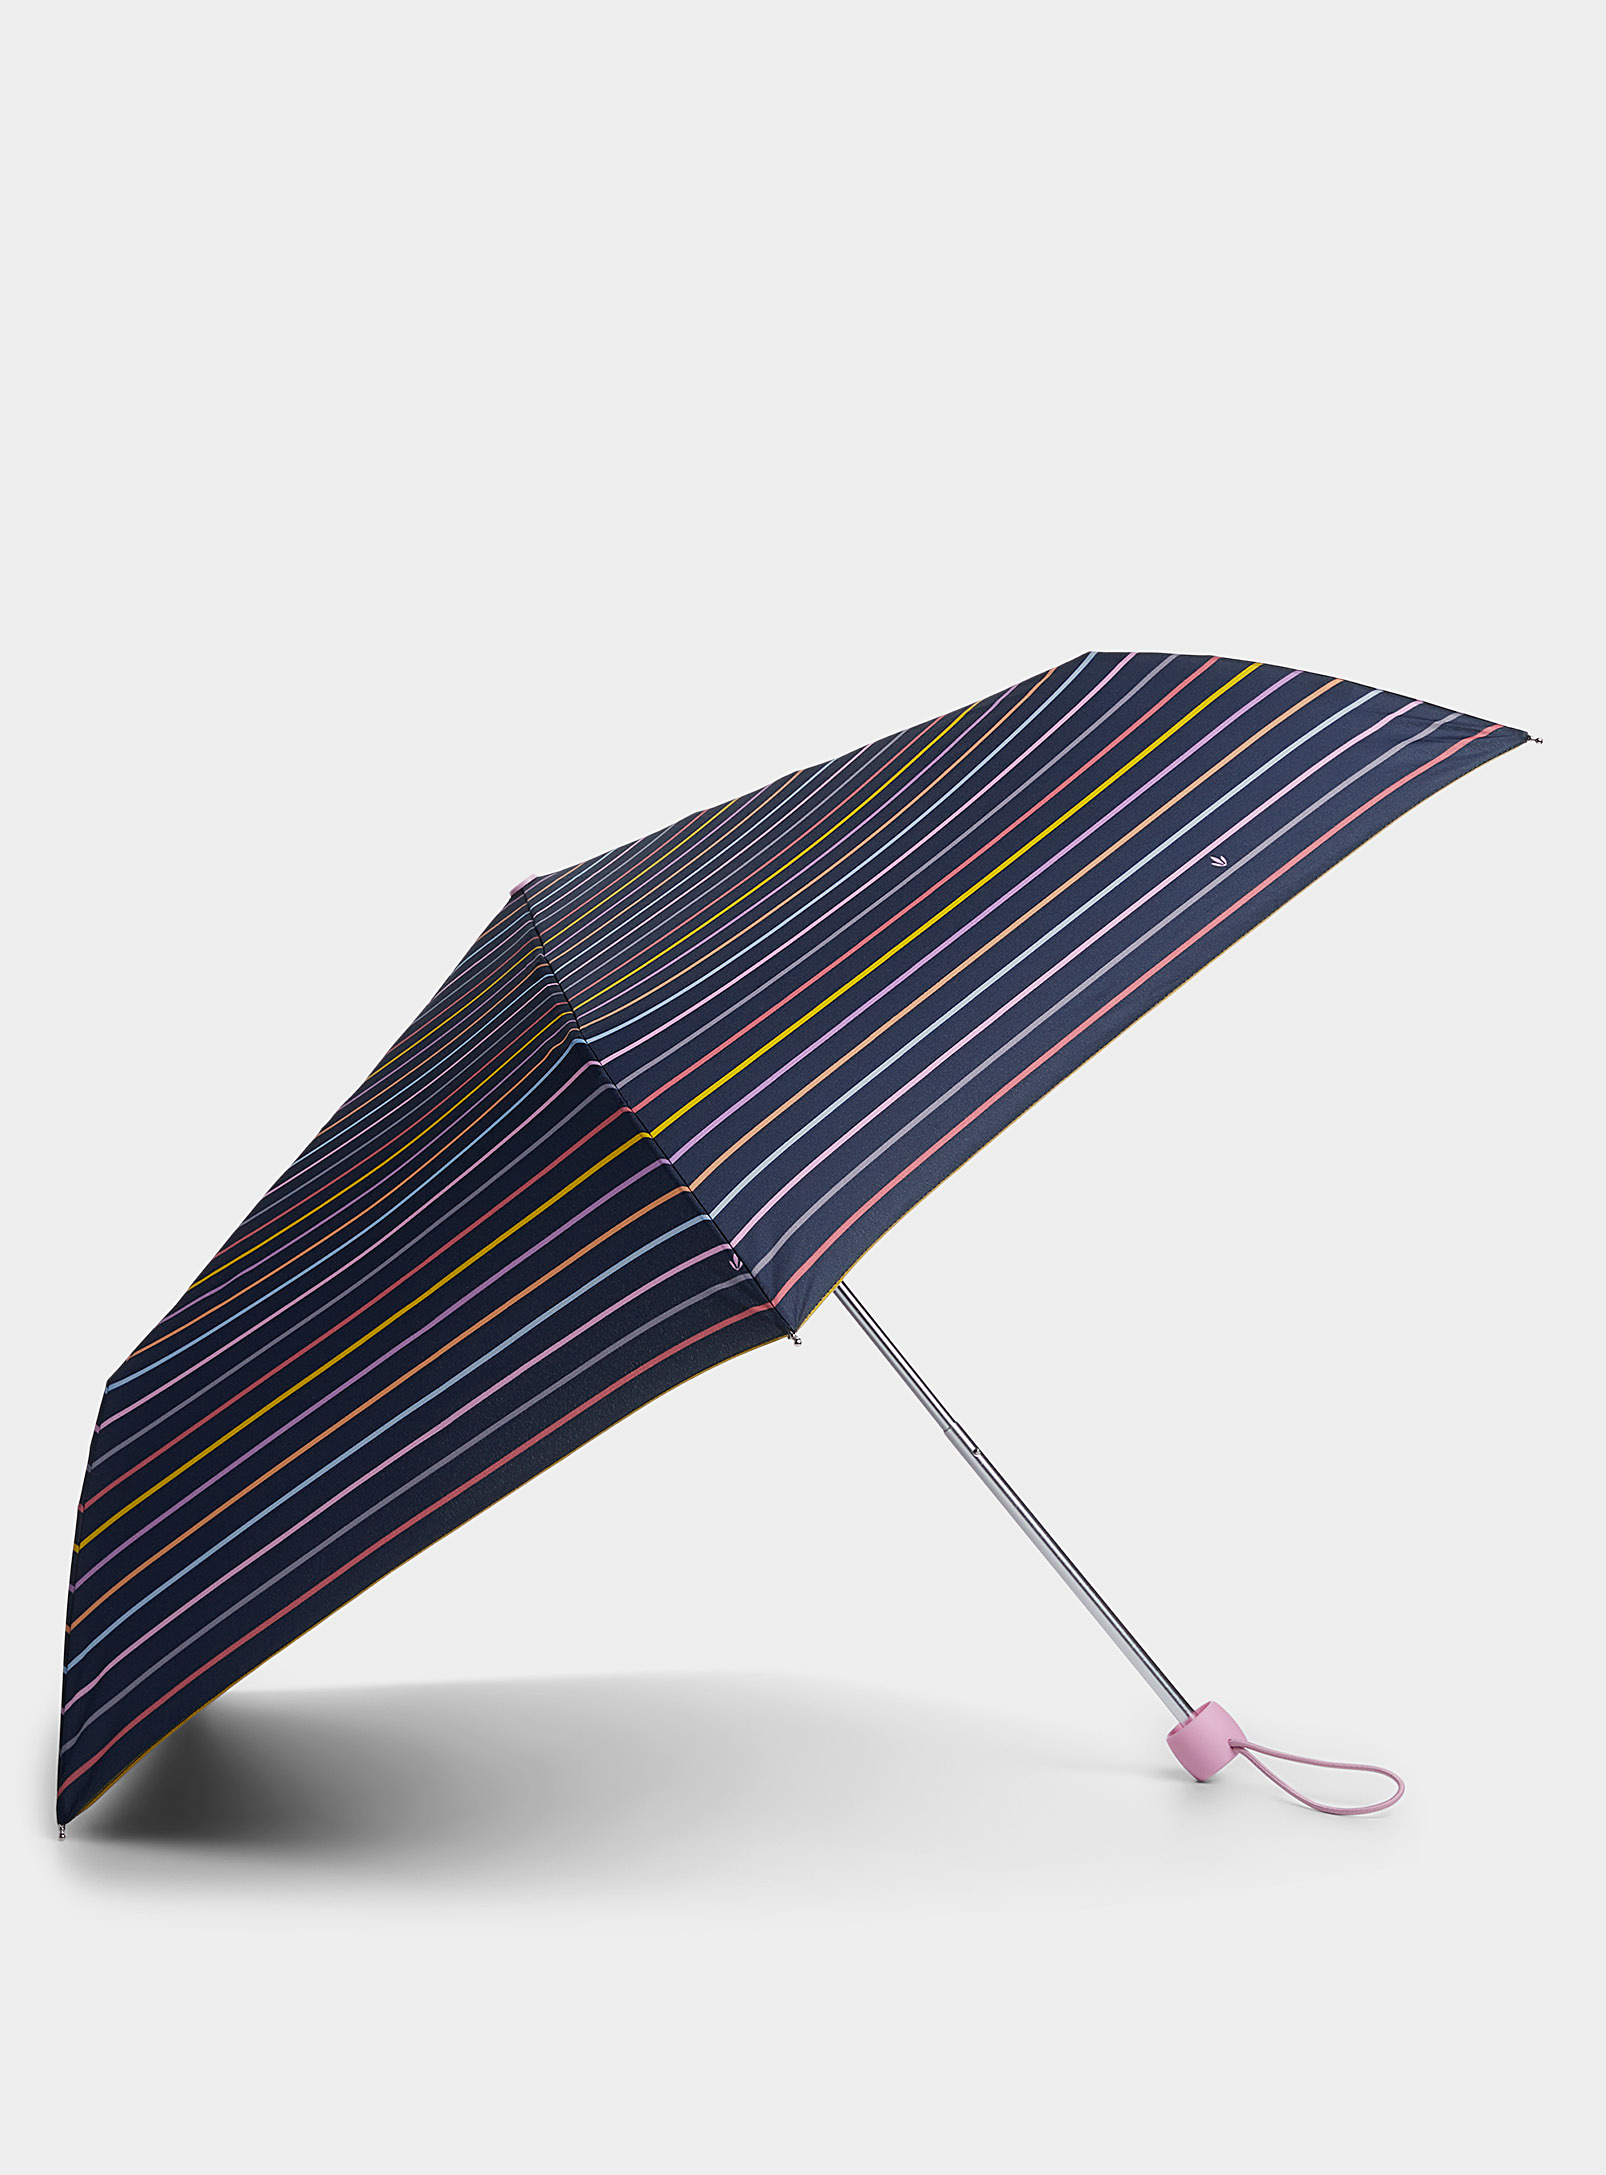 Fulton Patterned Black Umbrella In Assorted